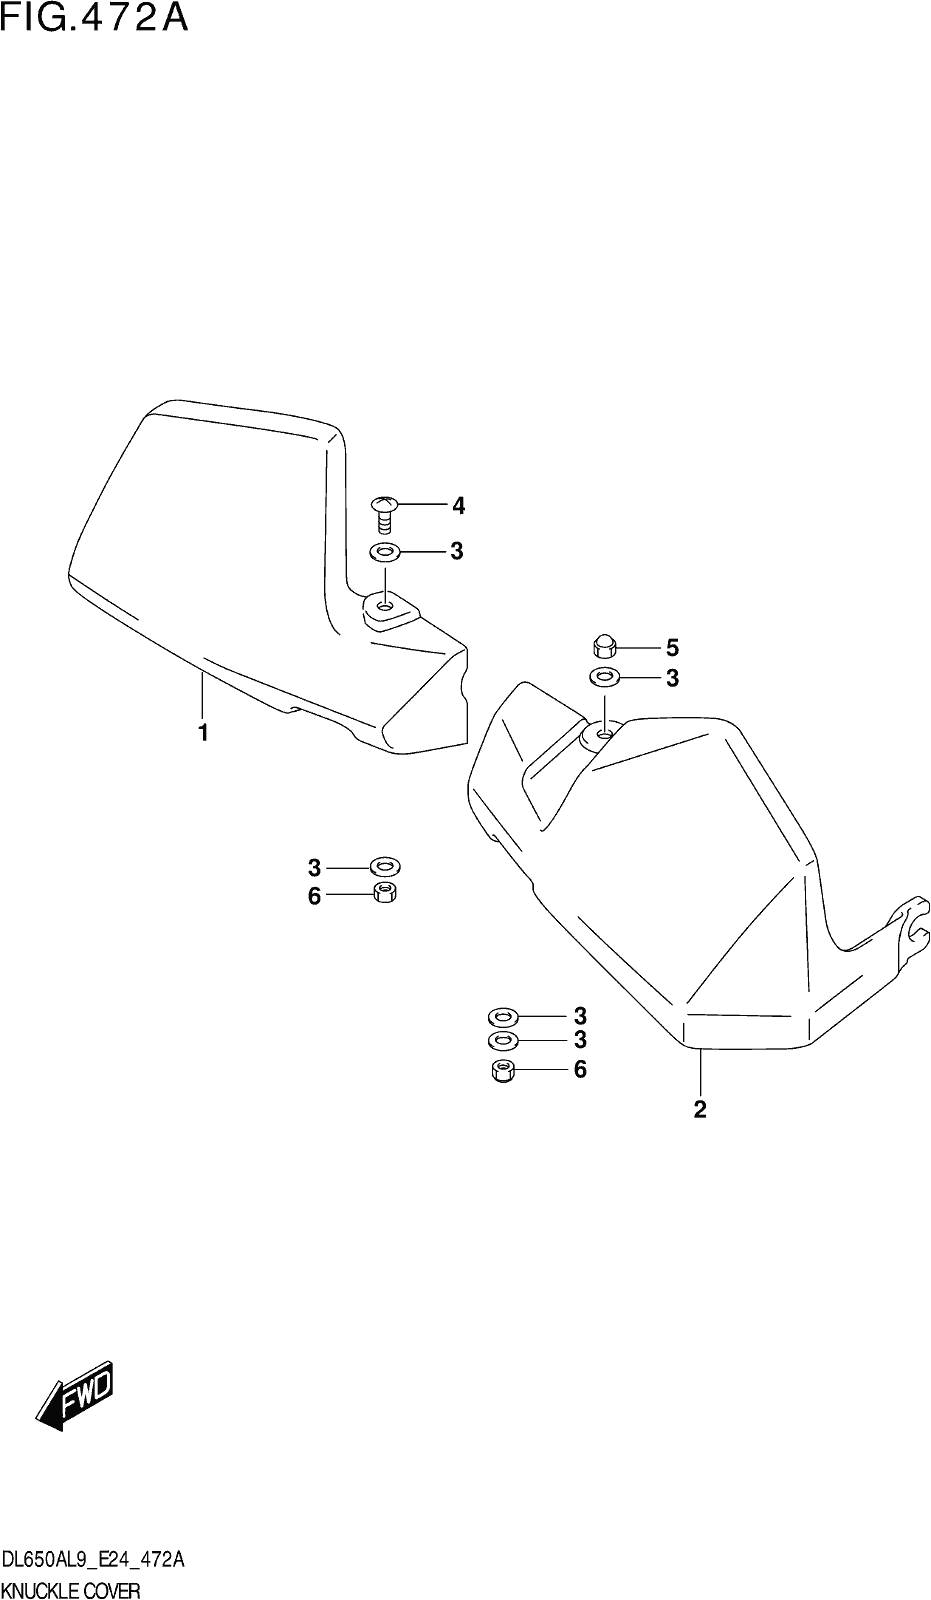 Fig.472a Knuckle Cover (dl650xa,dl650xaue)